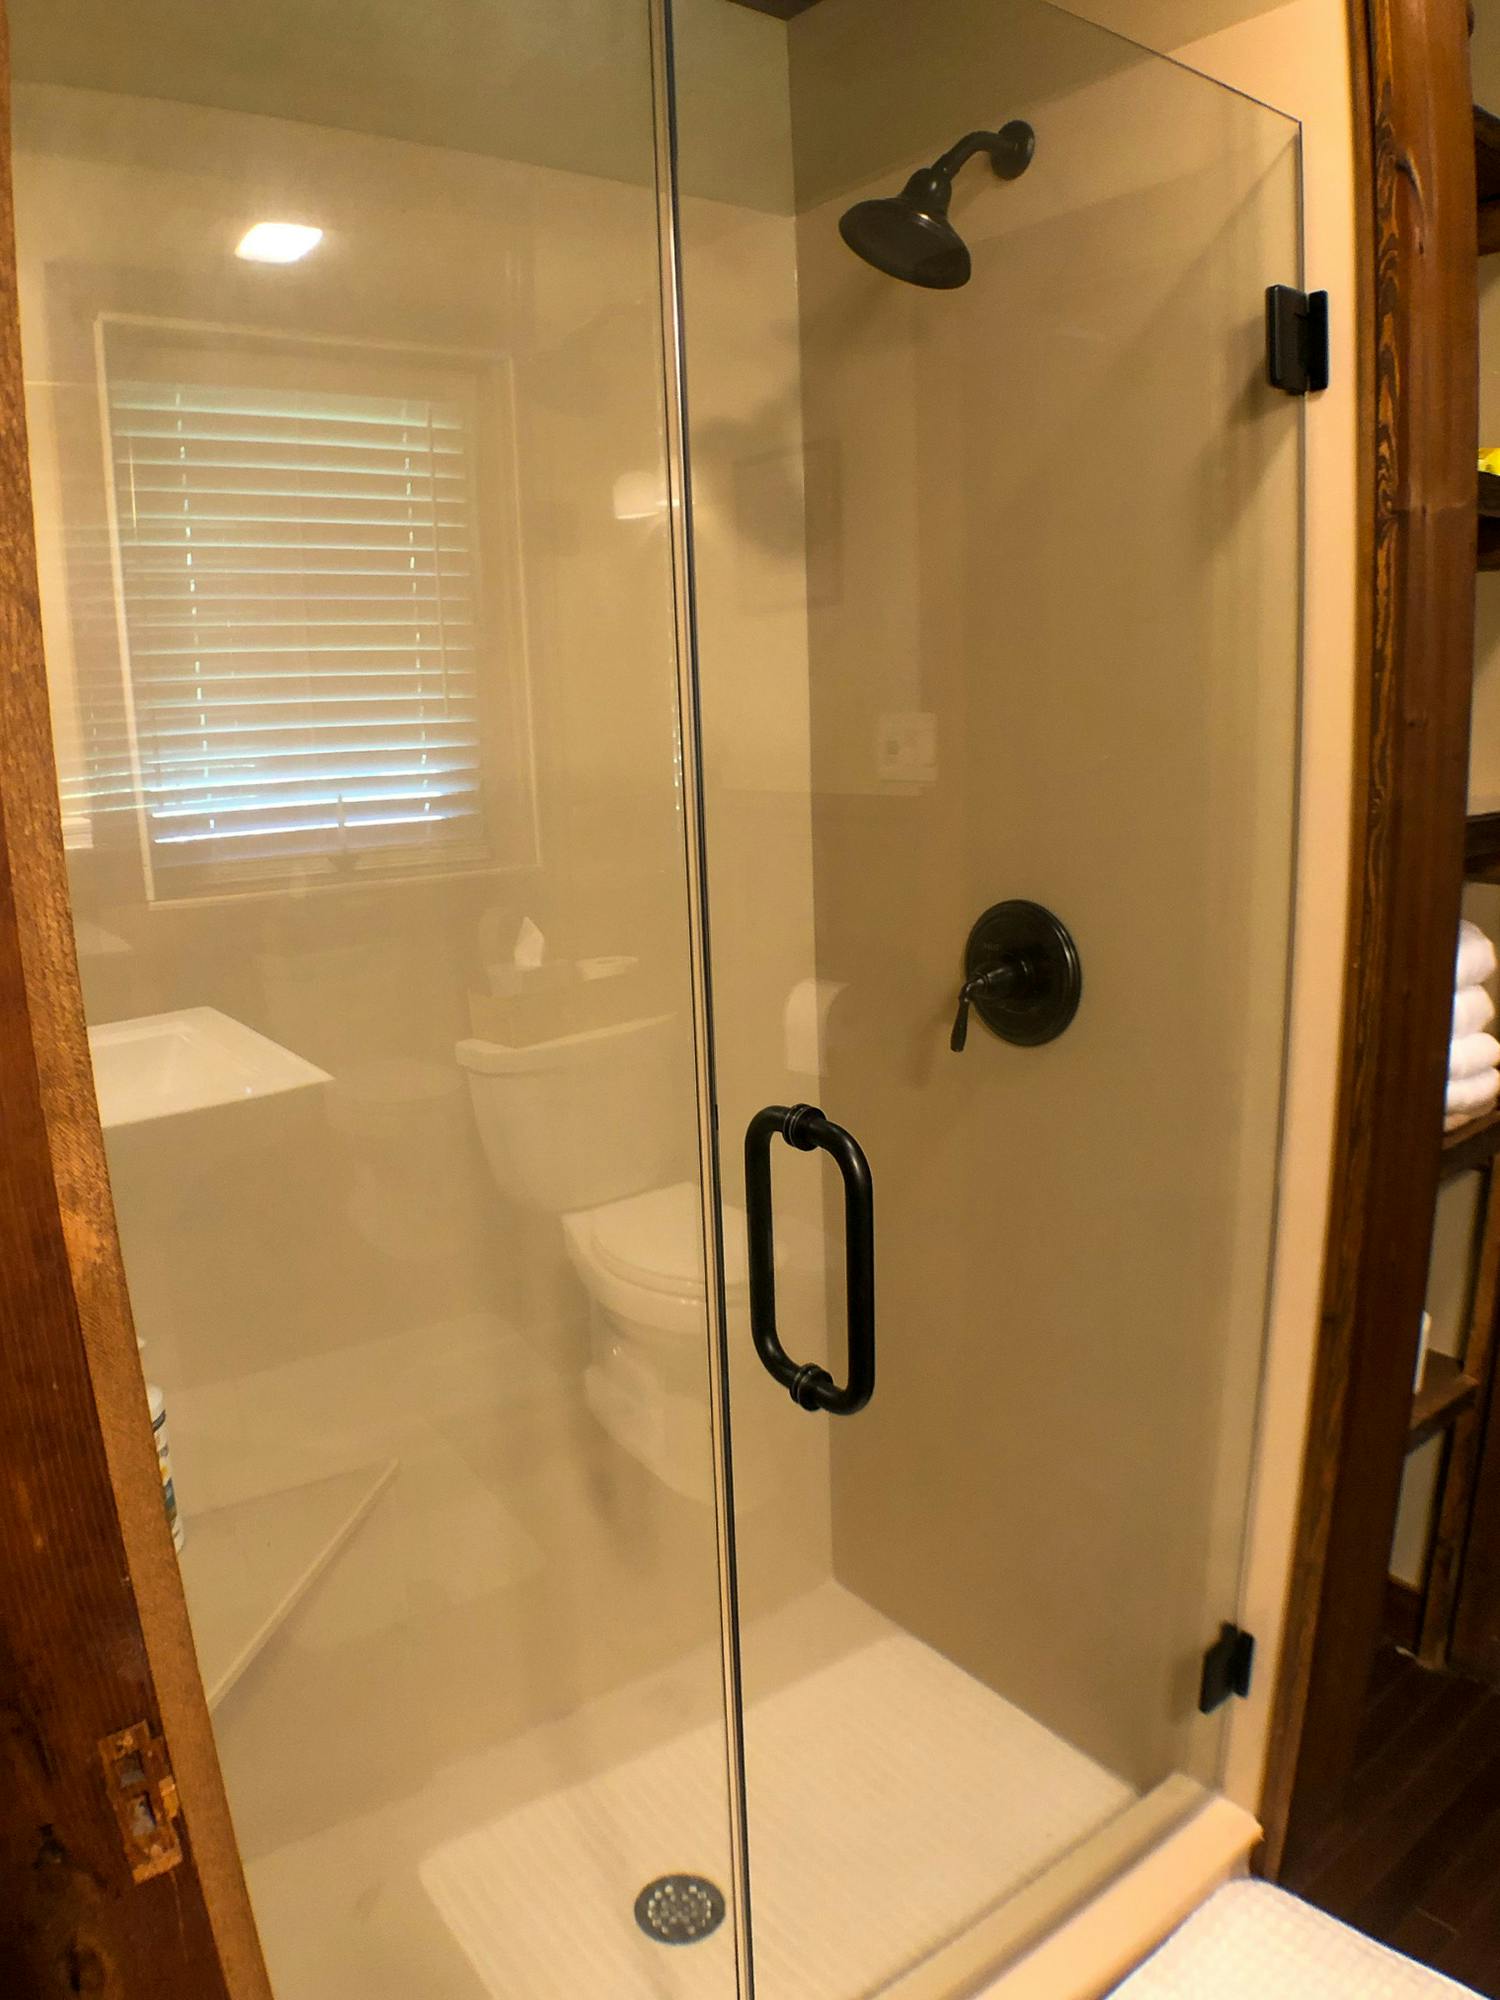 Modern bathroom with a glass shower enclosure and a dark showerhead.